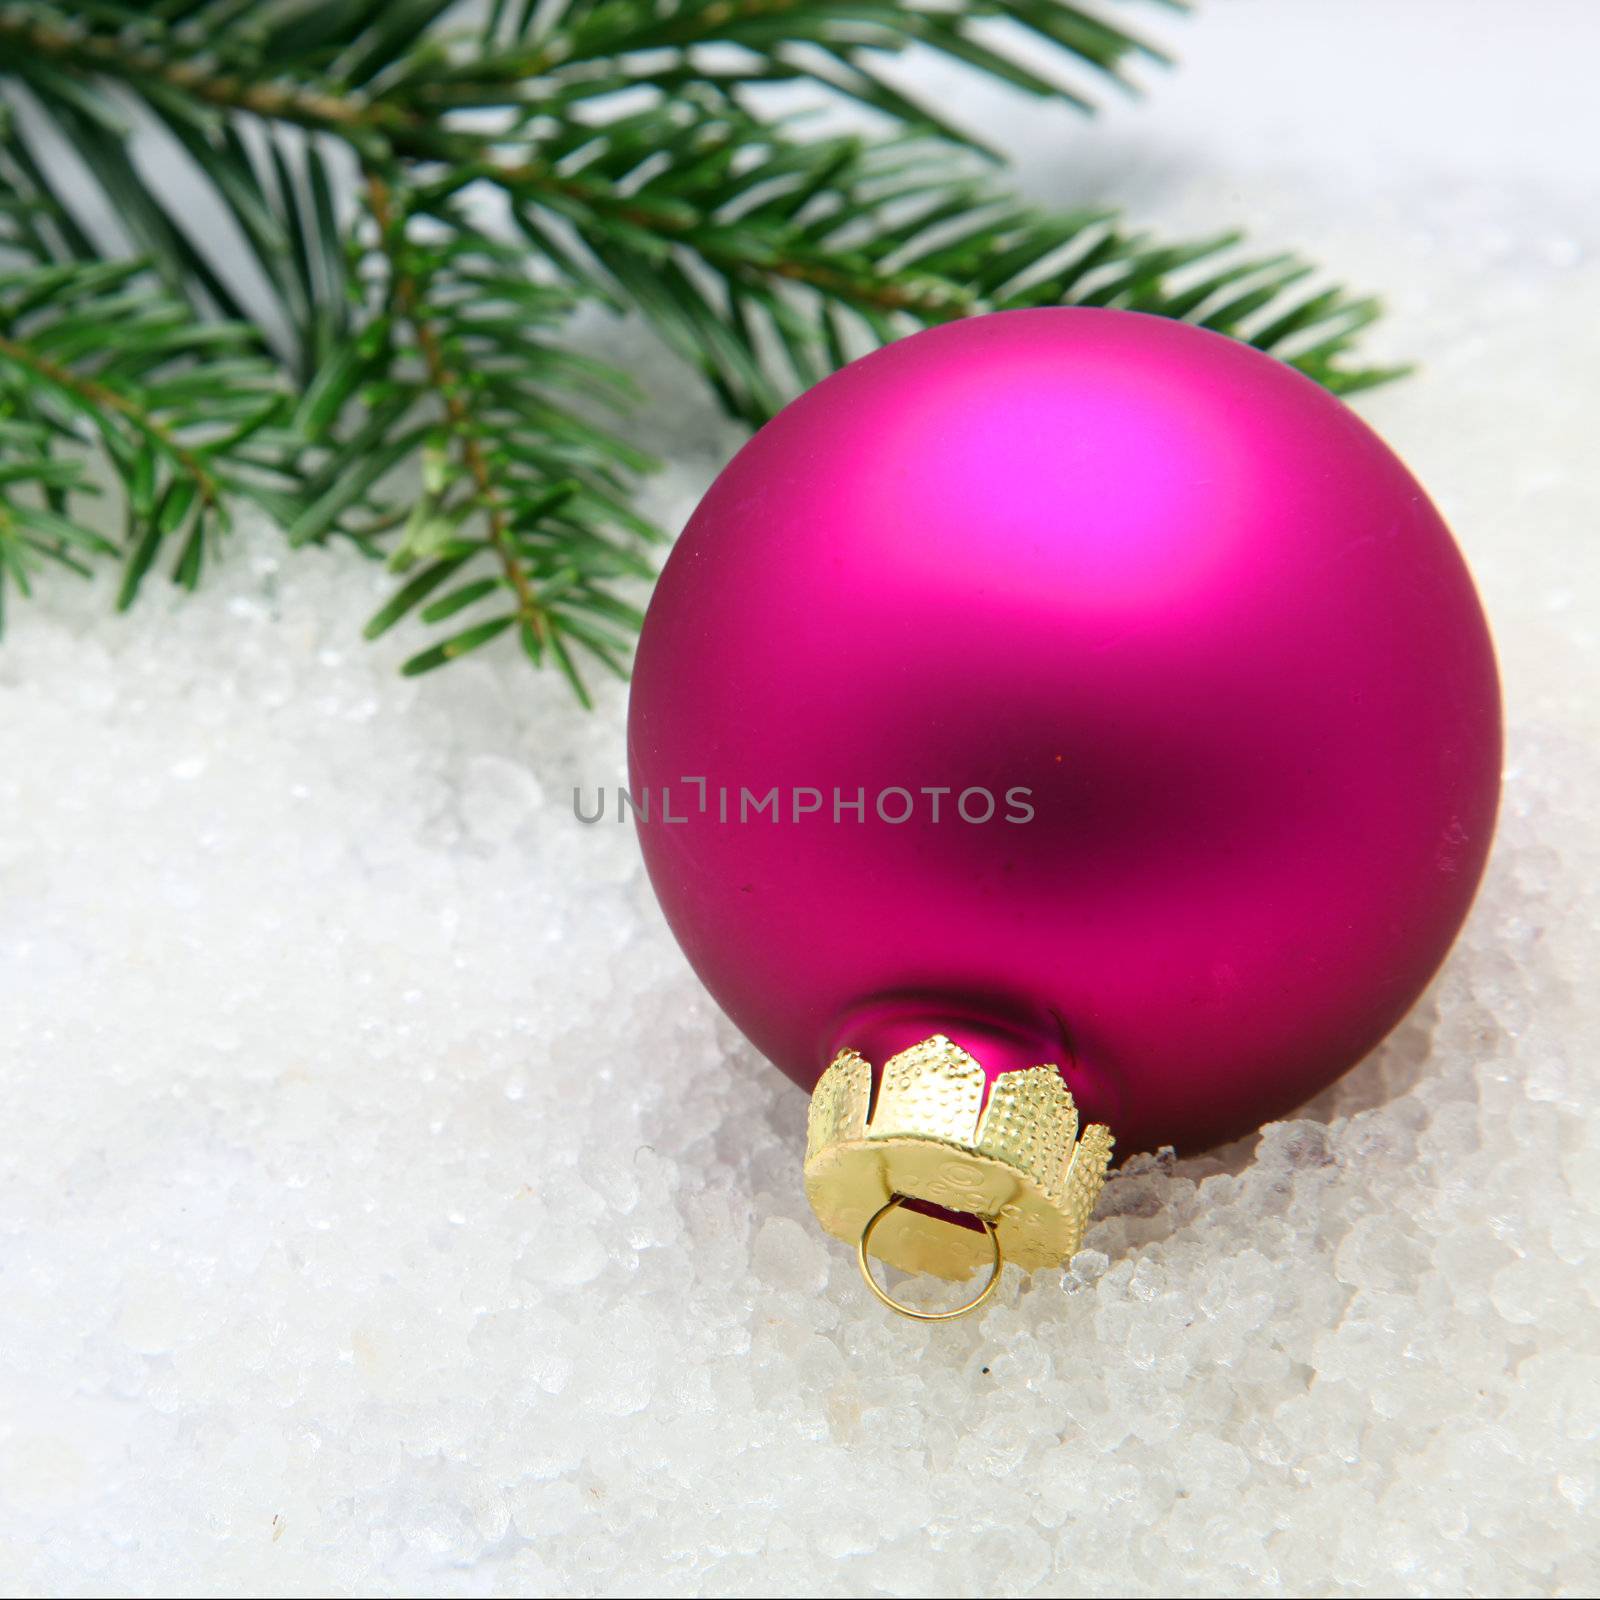 Fuchsia colored Christmas bauble by Farina6000